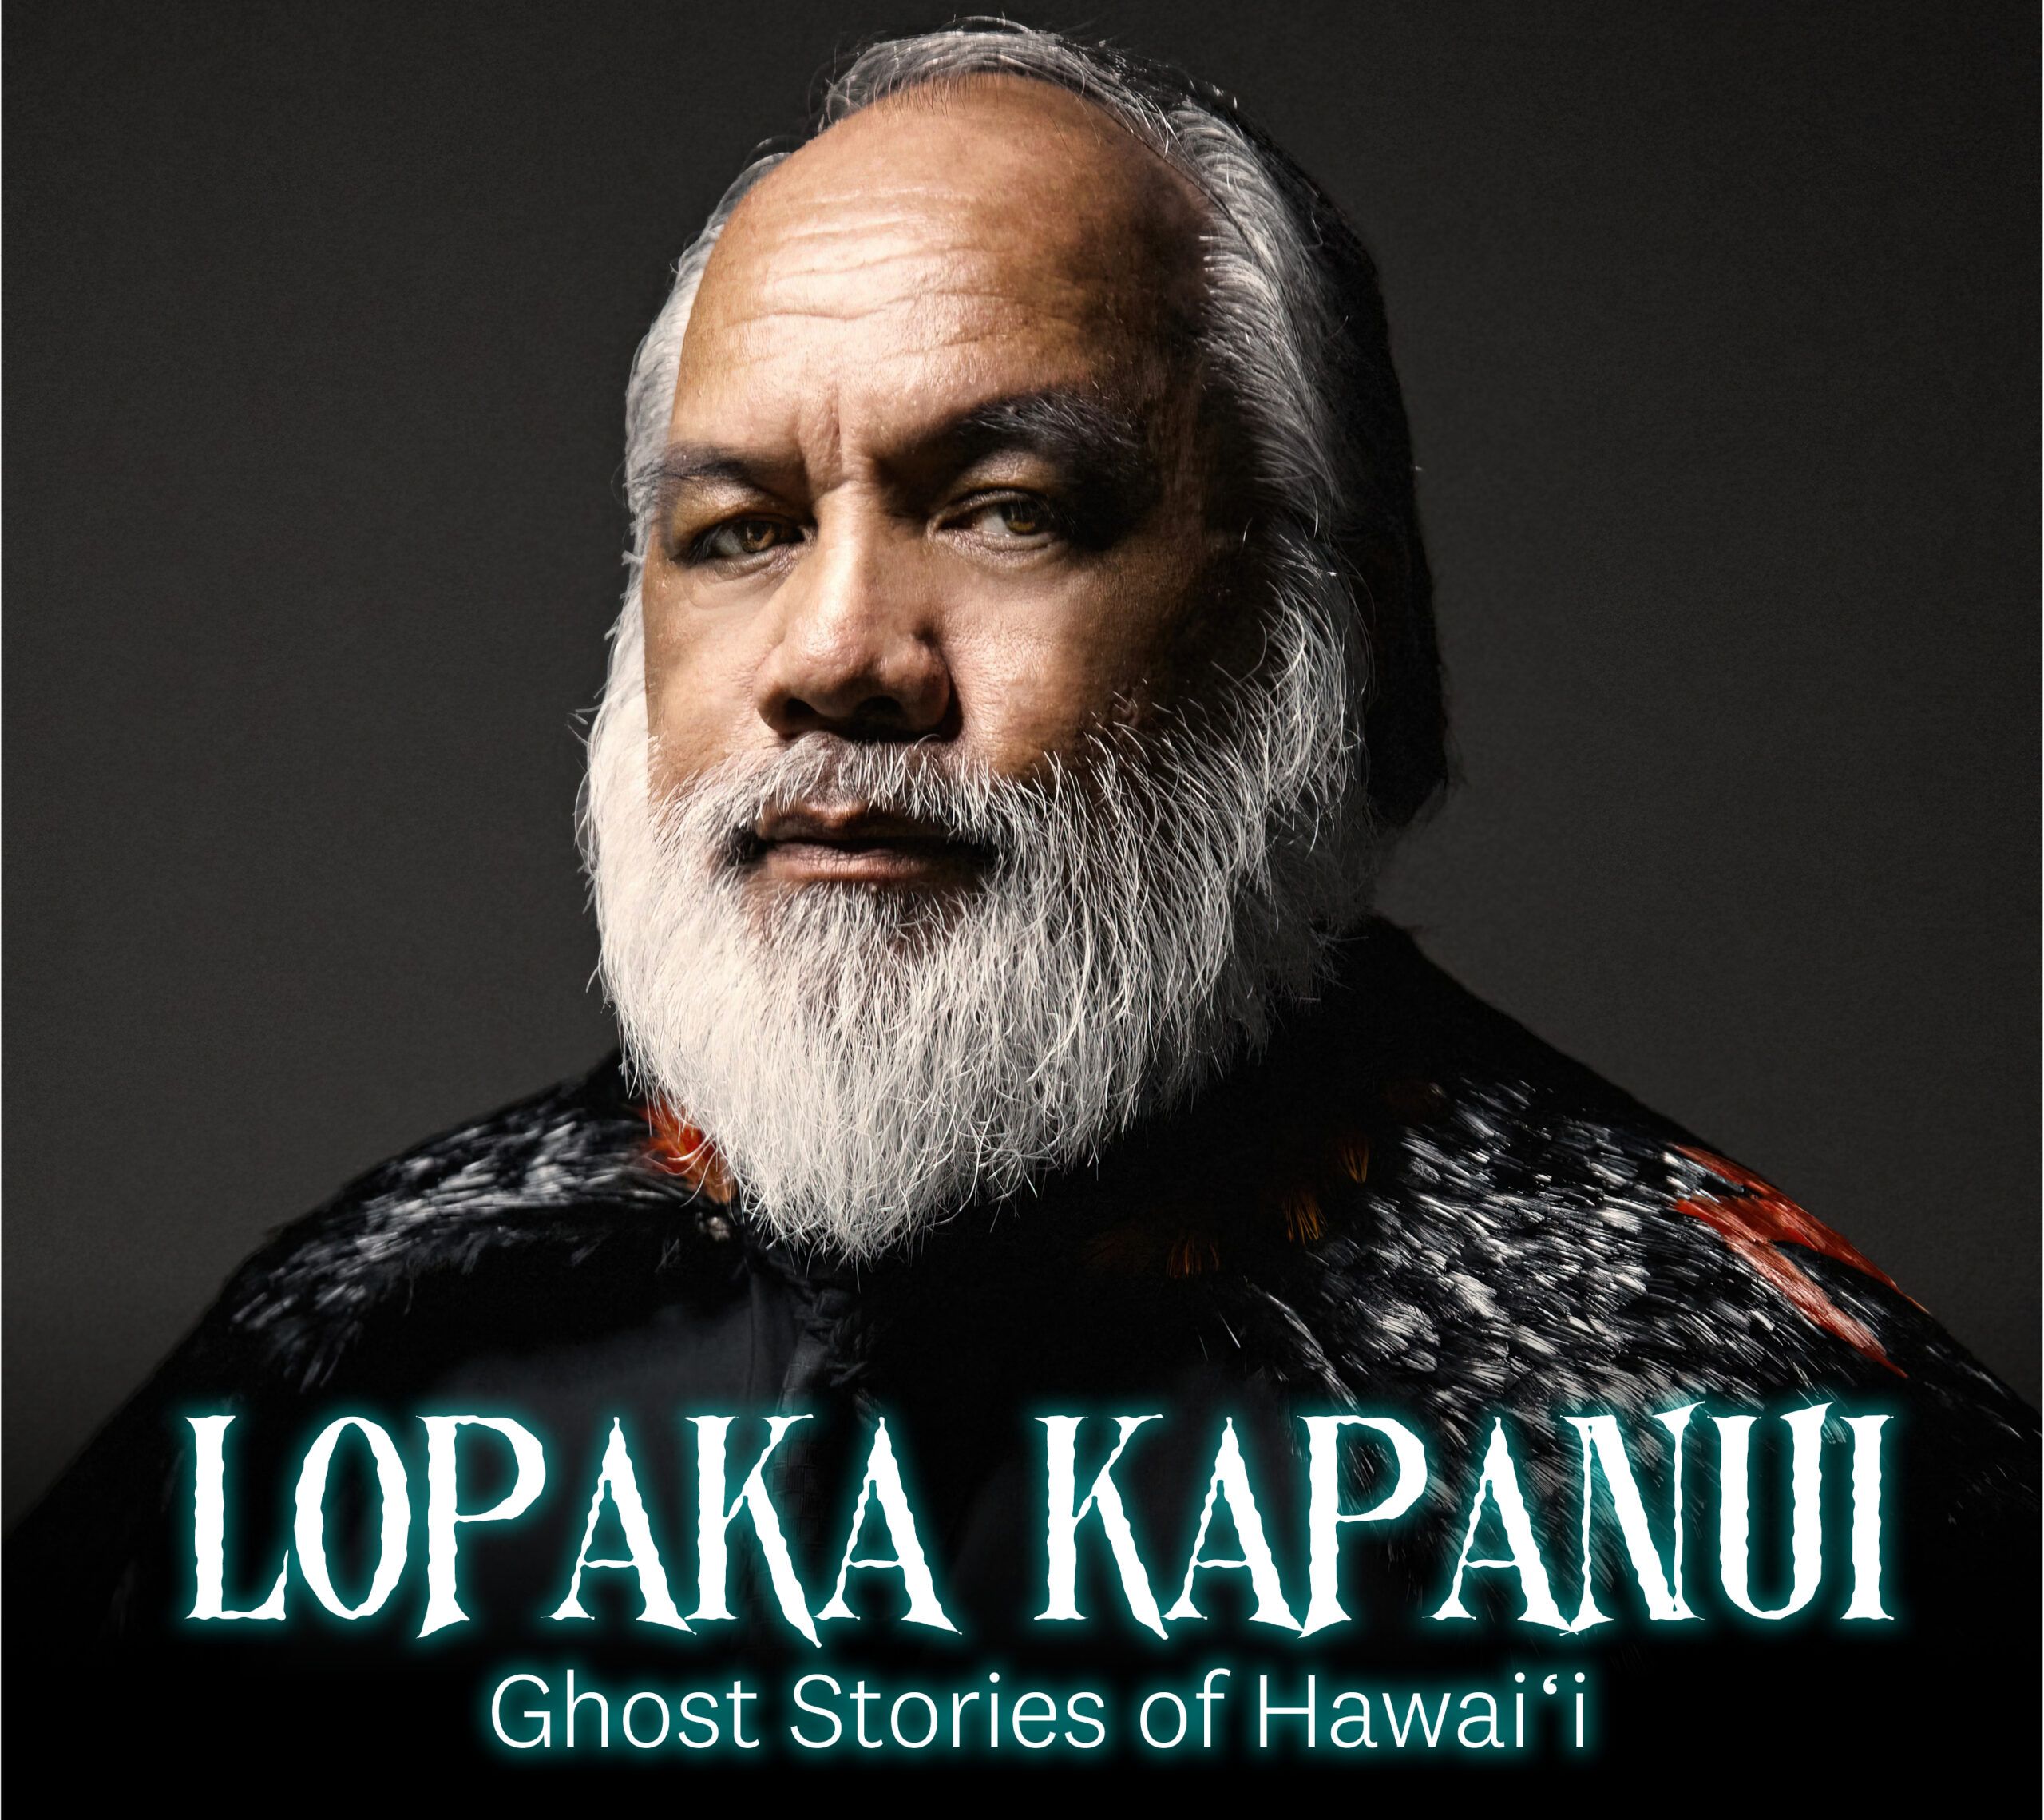 Lopaka kapanu ghost stories of hawaii.